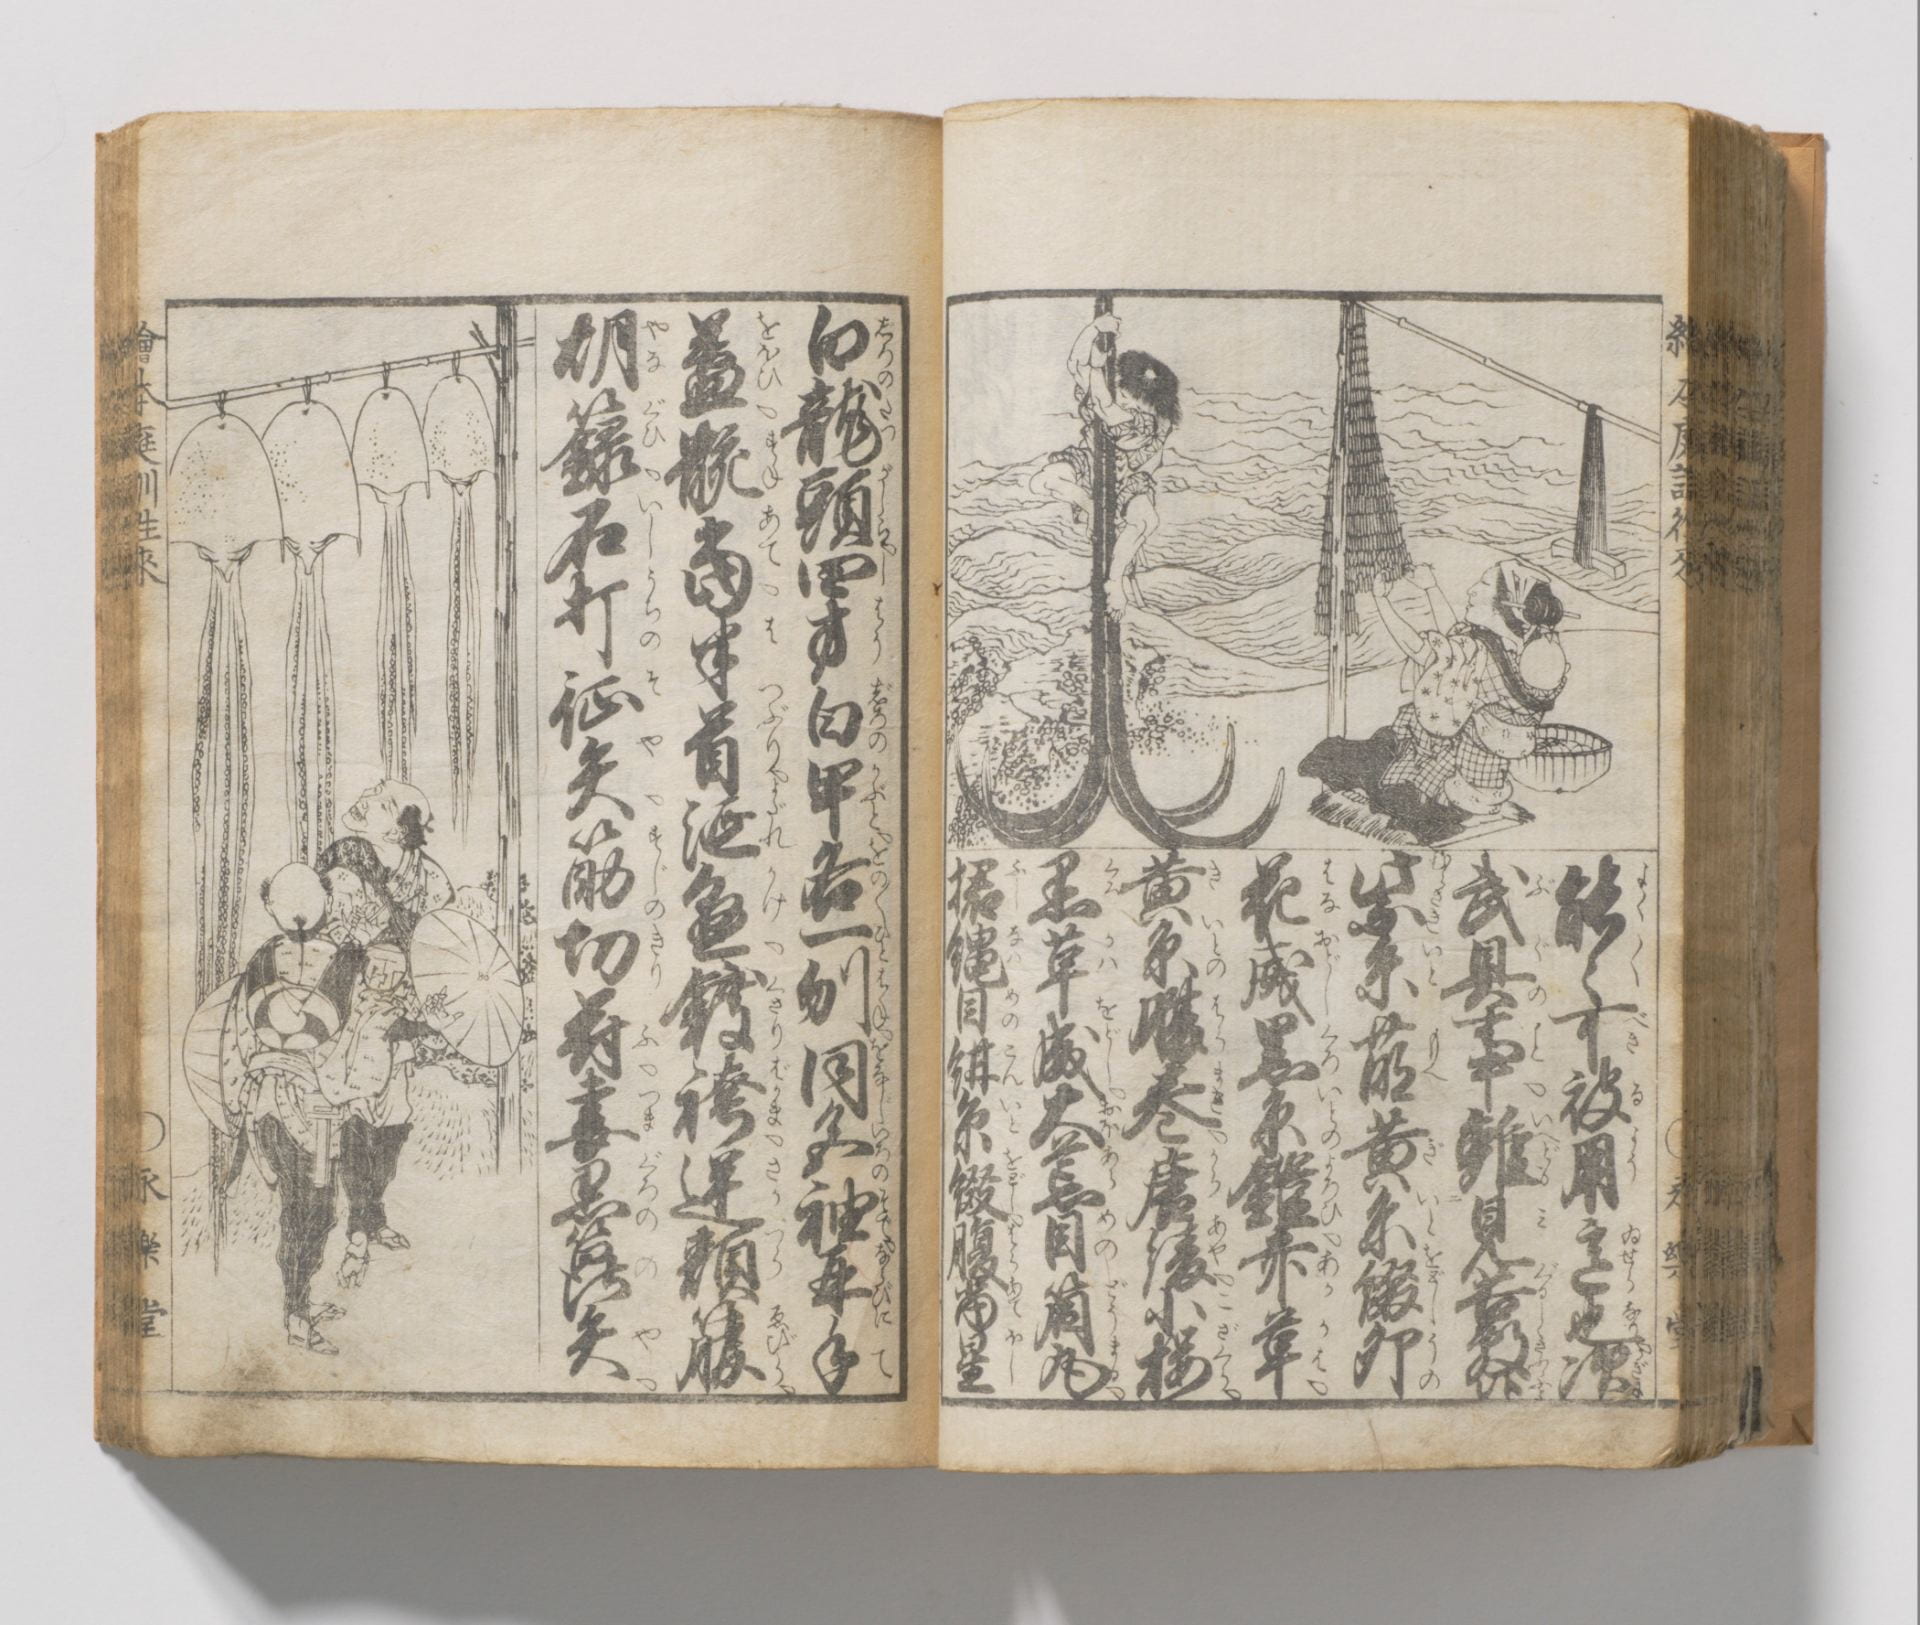 Katsushika Hokusai, "Ehon Teikin Orai", 1828, book of color woodblock prints on paper. Gift of Robert W. Christy; MIS.997.4.5.